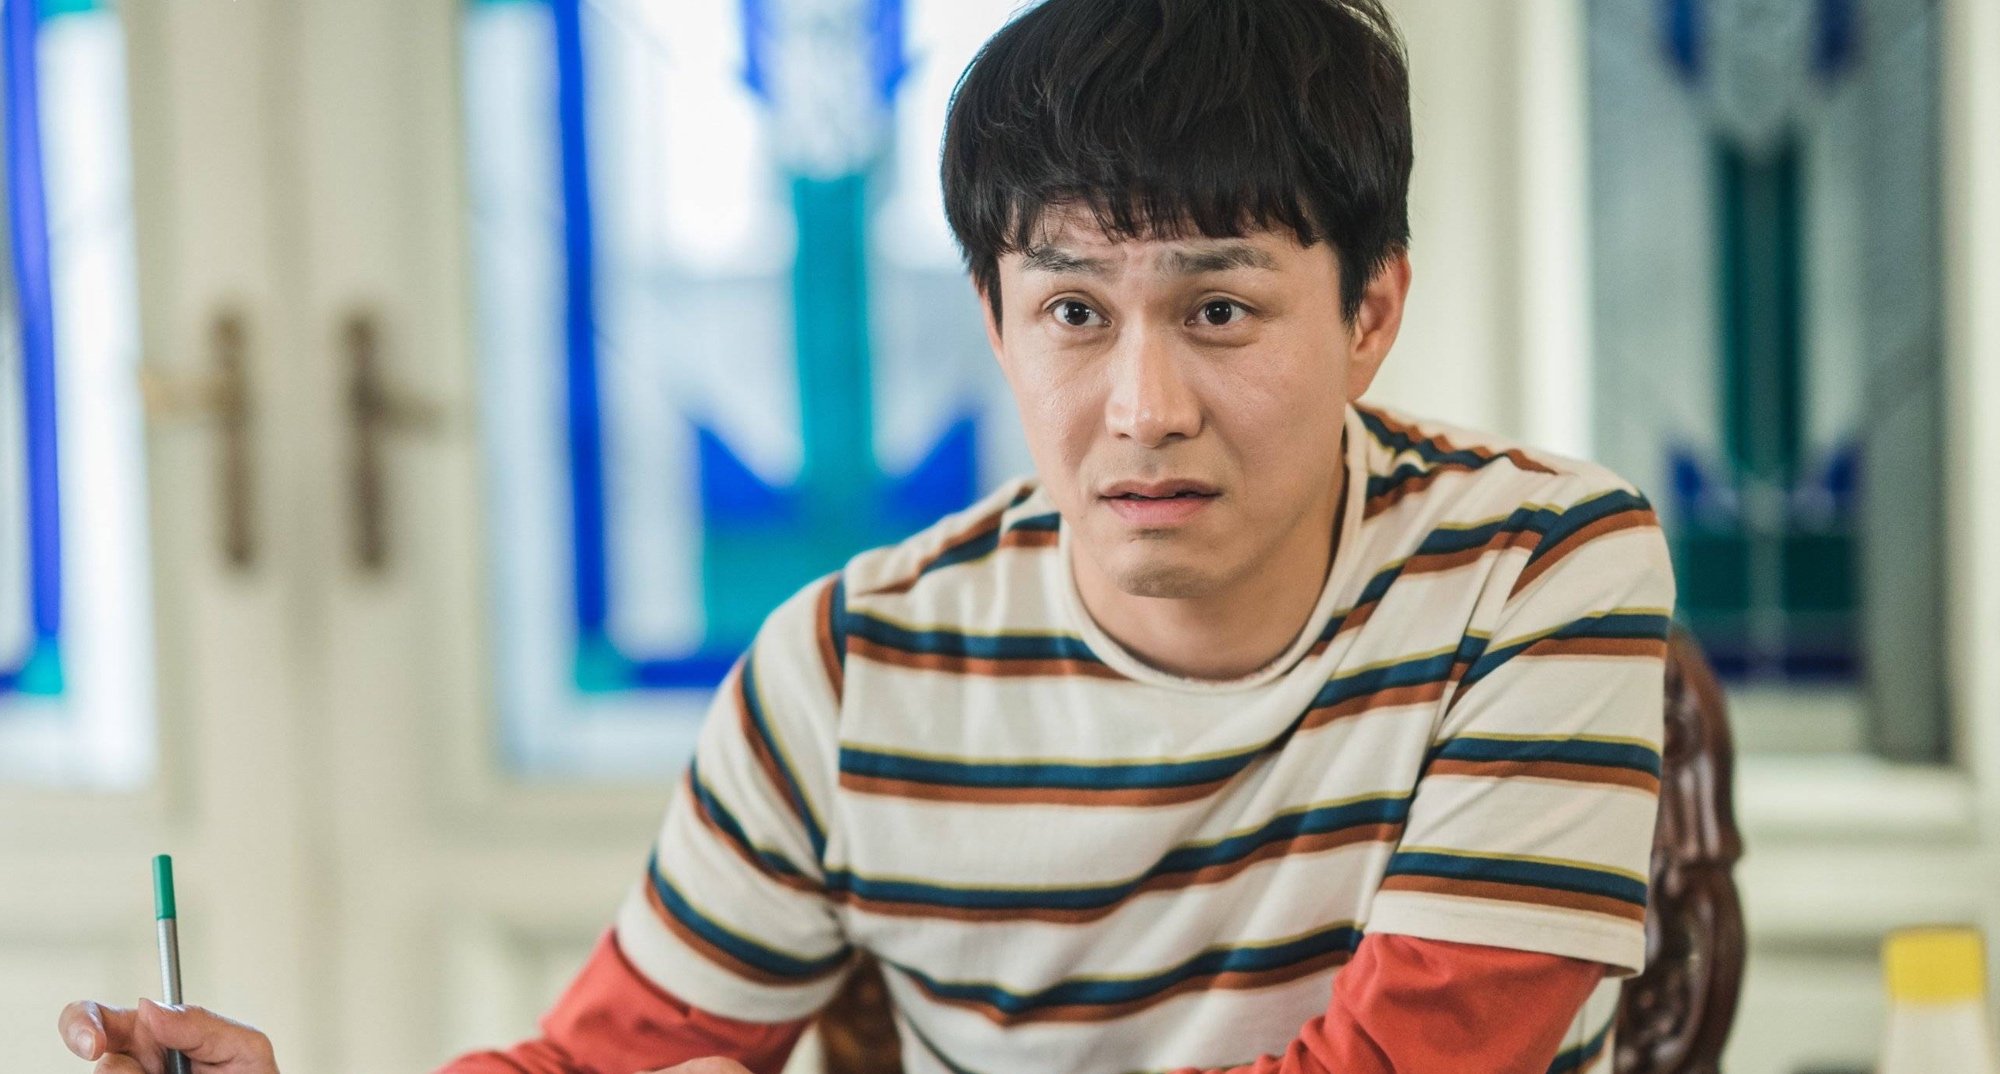 Oh Jung-se in 'It's Okay to Not Be Okay' K-drama wearing stripped shirt.